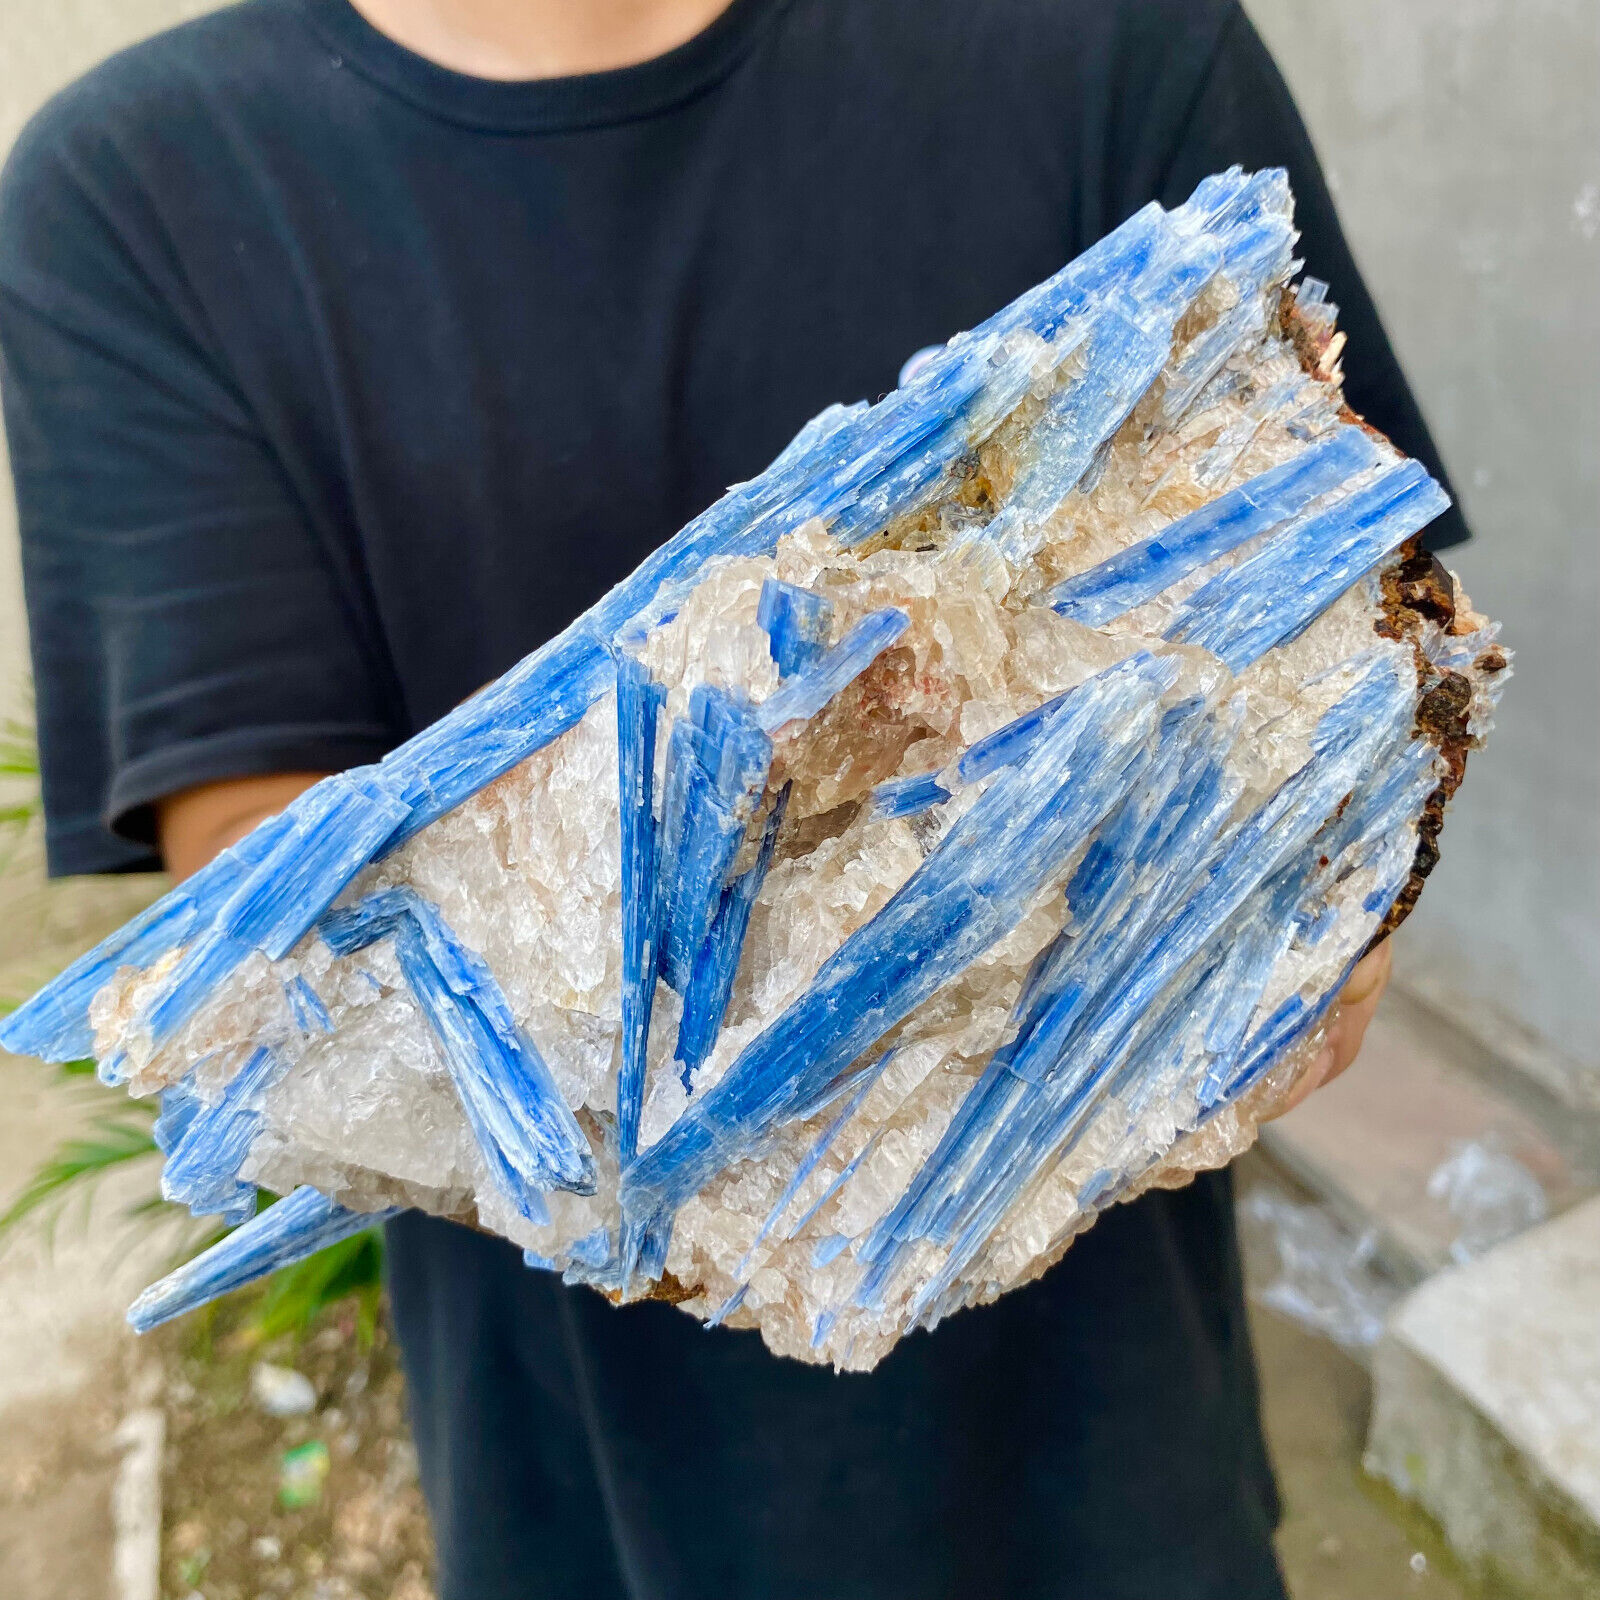 5lb Rare Natural beautiful Blue KYANITE with Quartz Crystal Specimen Rough